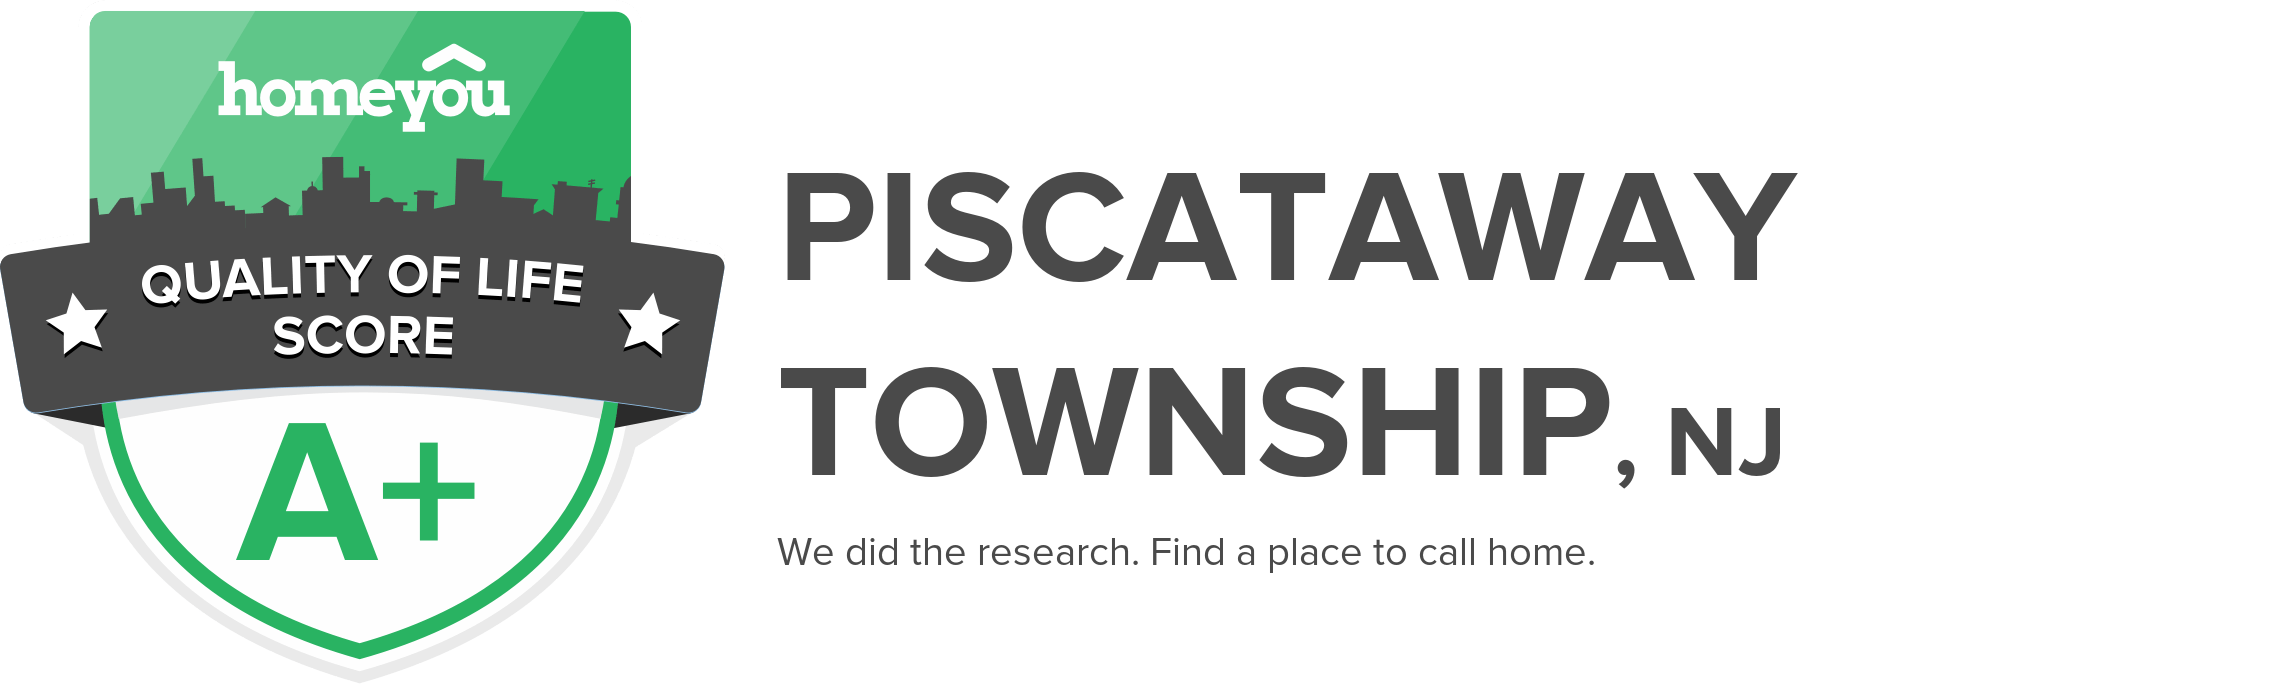 Piscataway Township, NJ